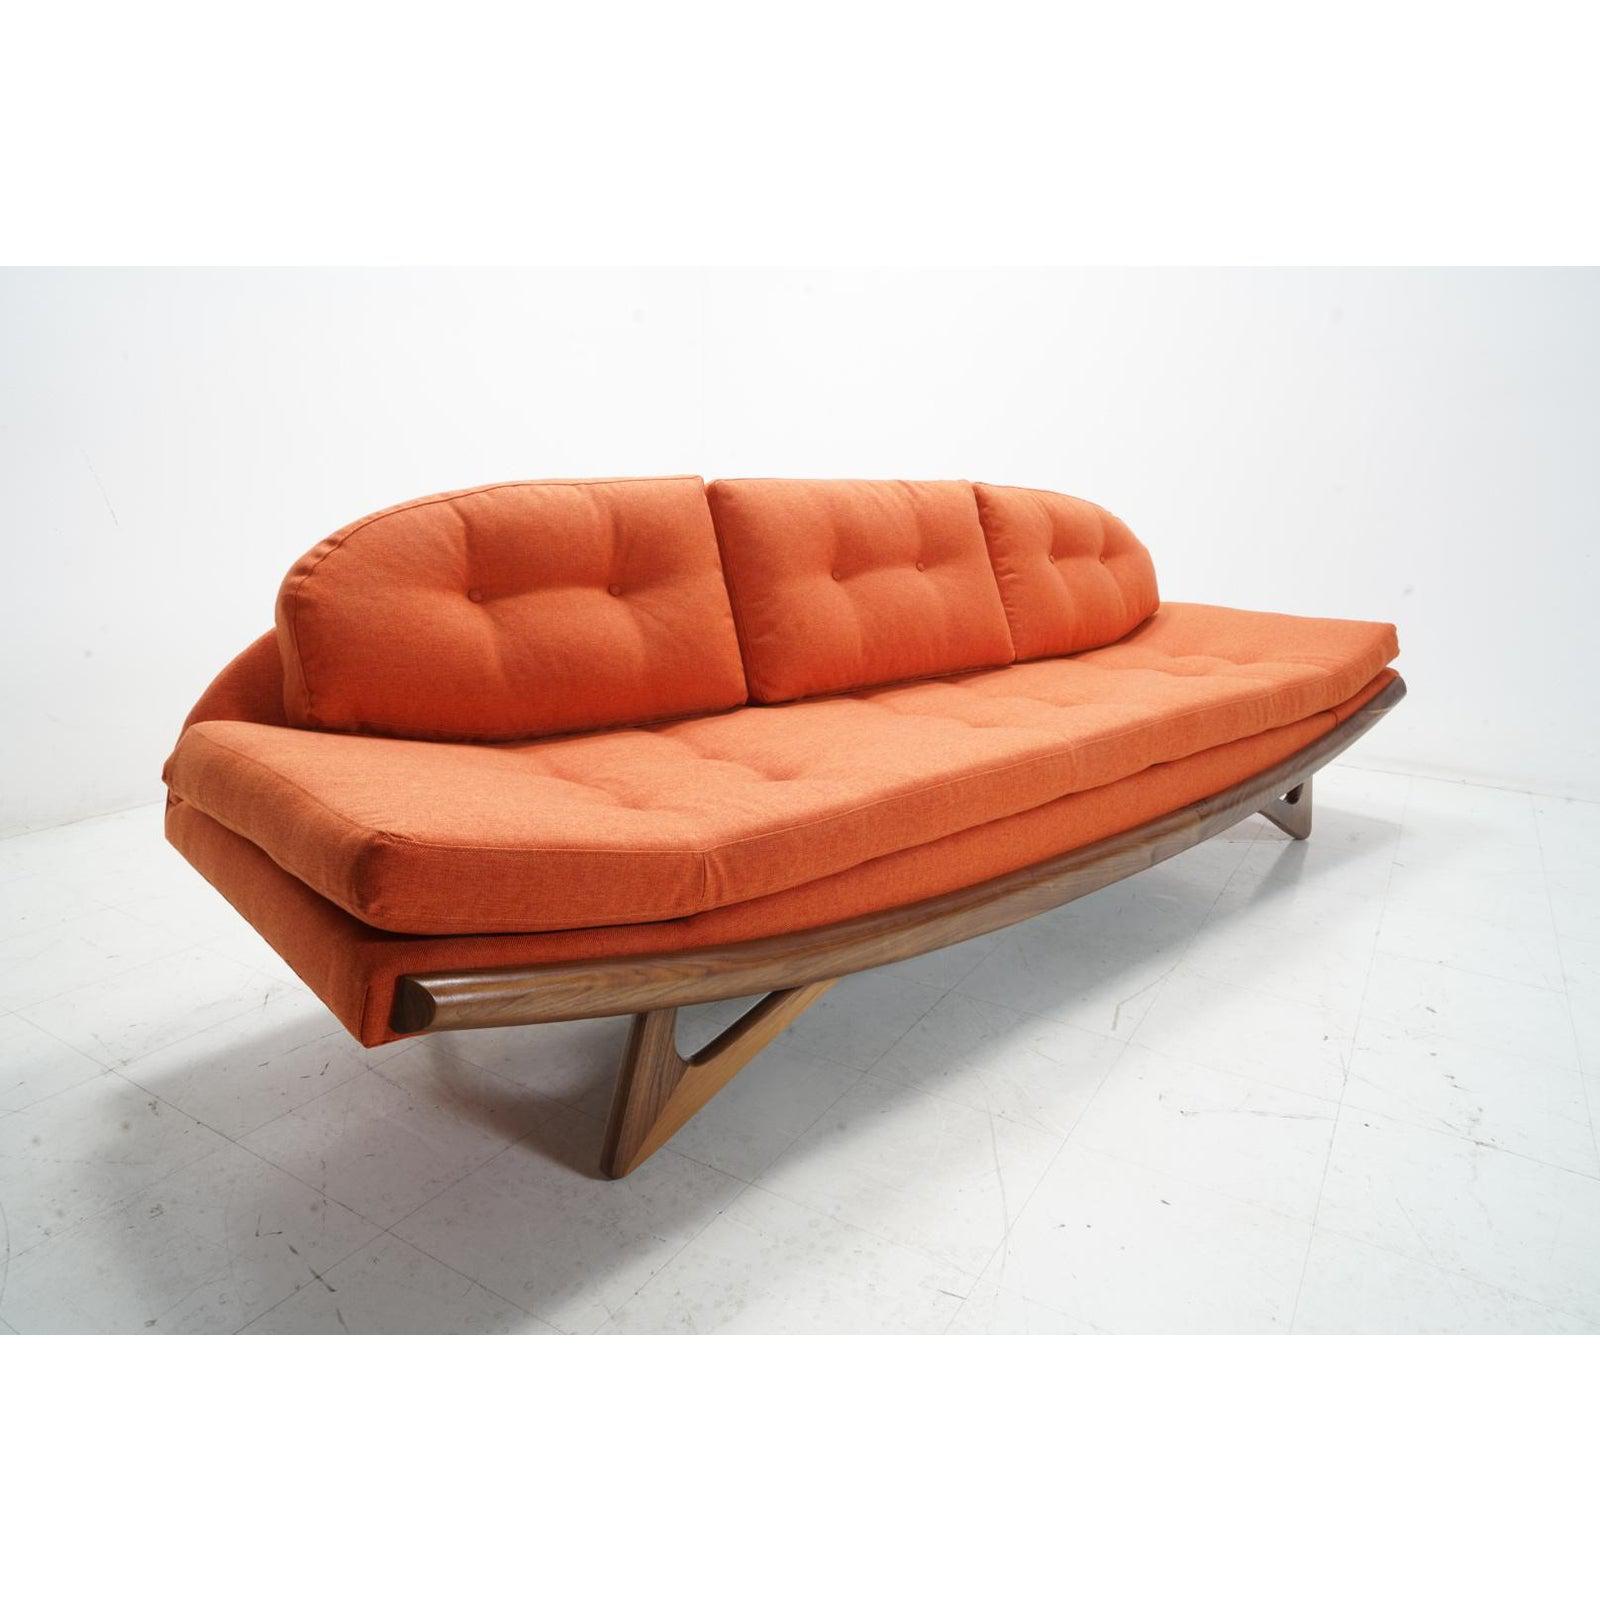 Custom "Curved Gondola"  Style Sofa